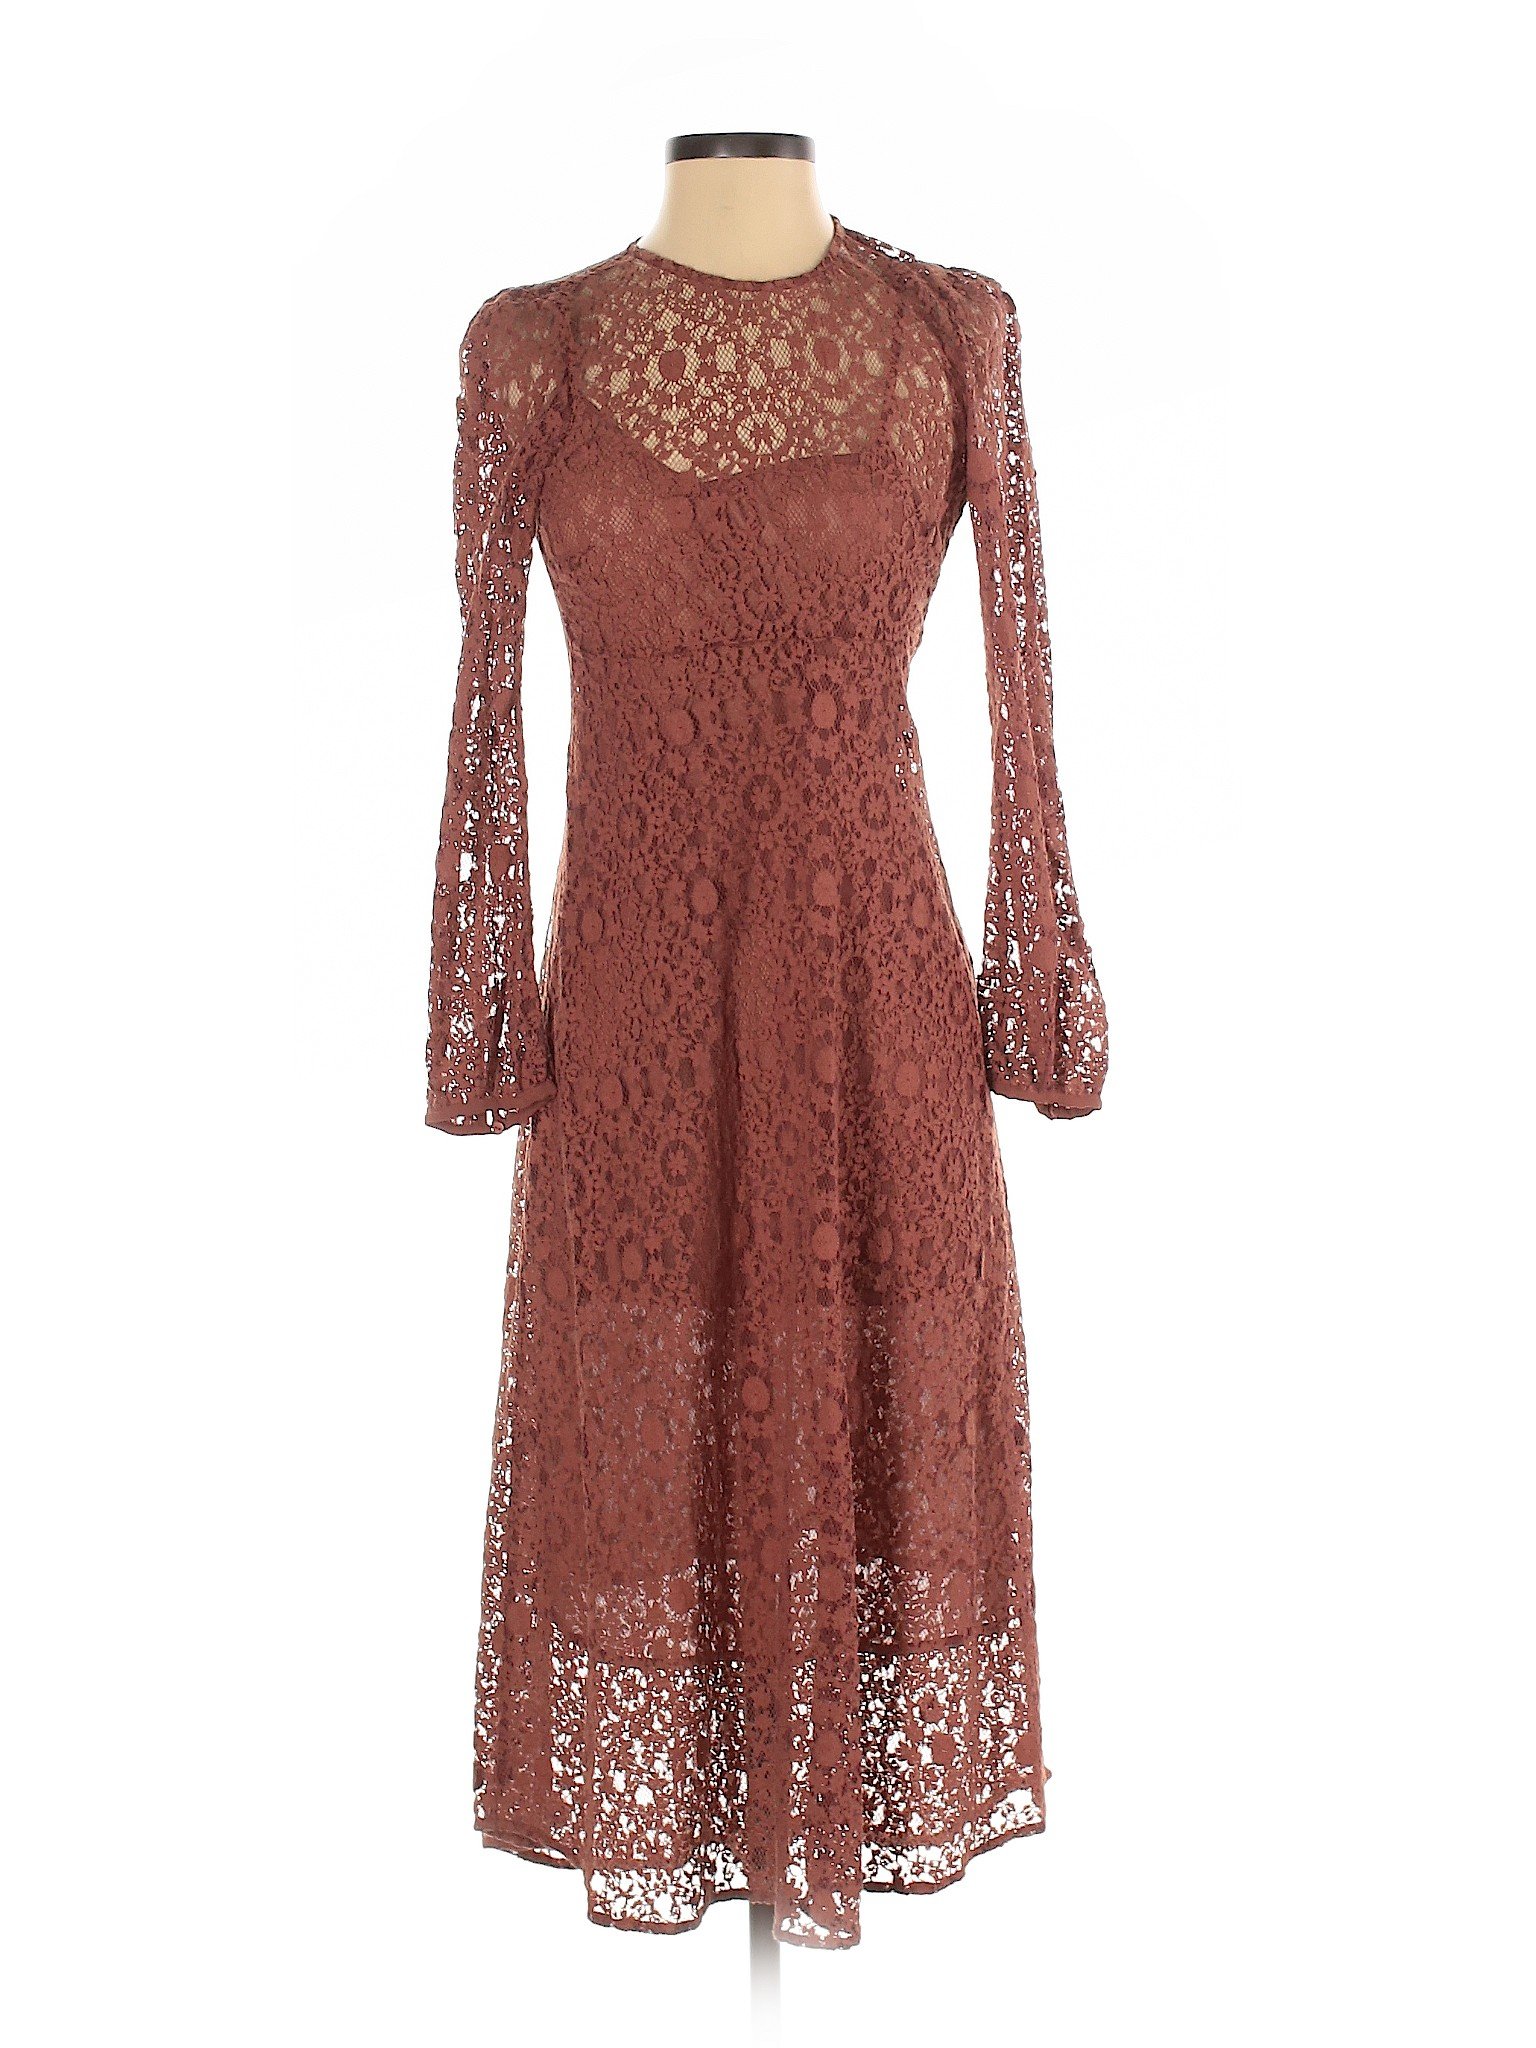 Zara Women Brown Cocktail Dress XS | eBay